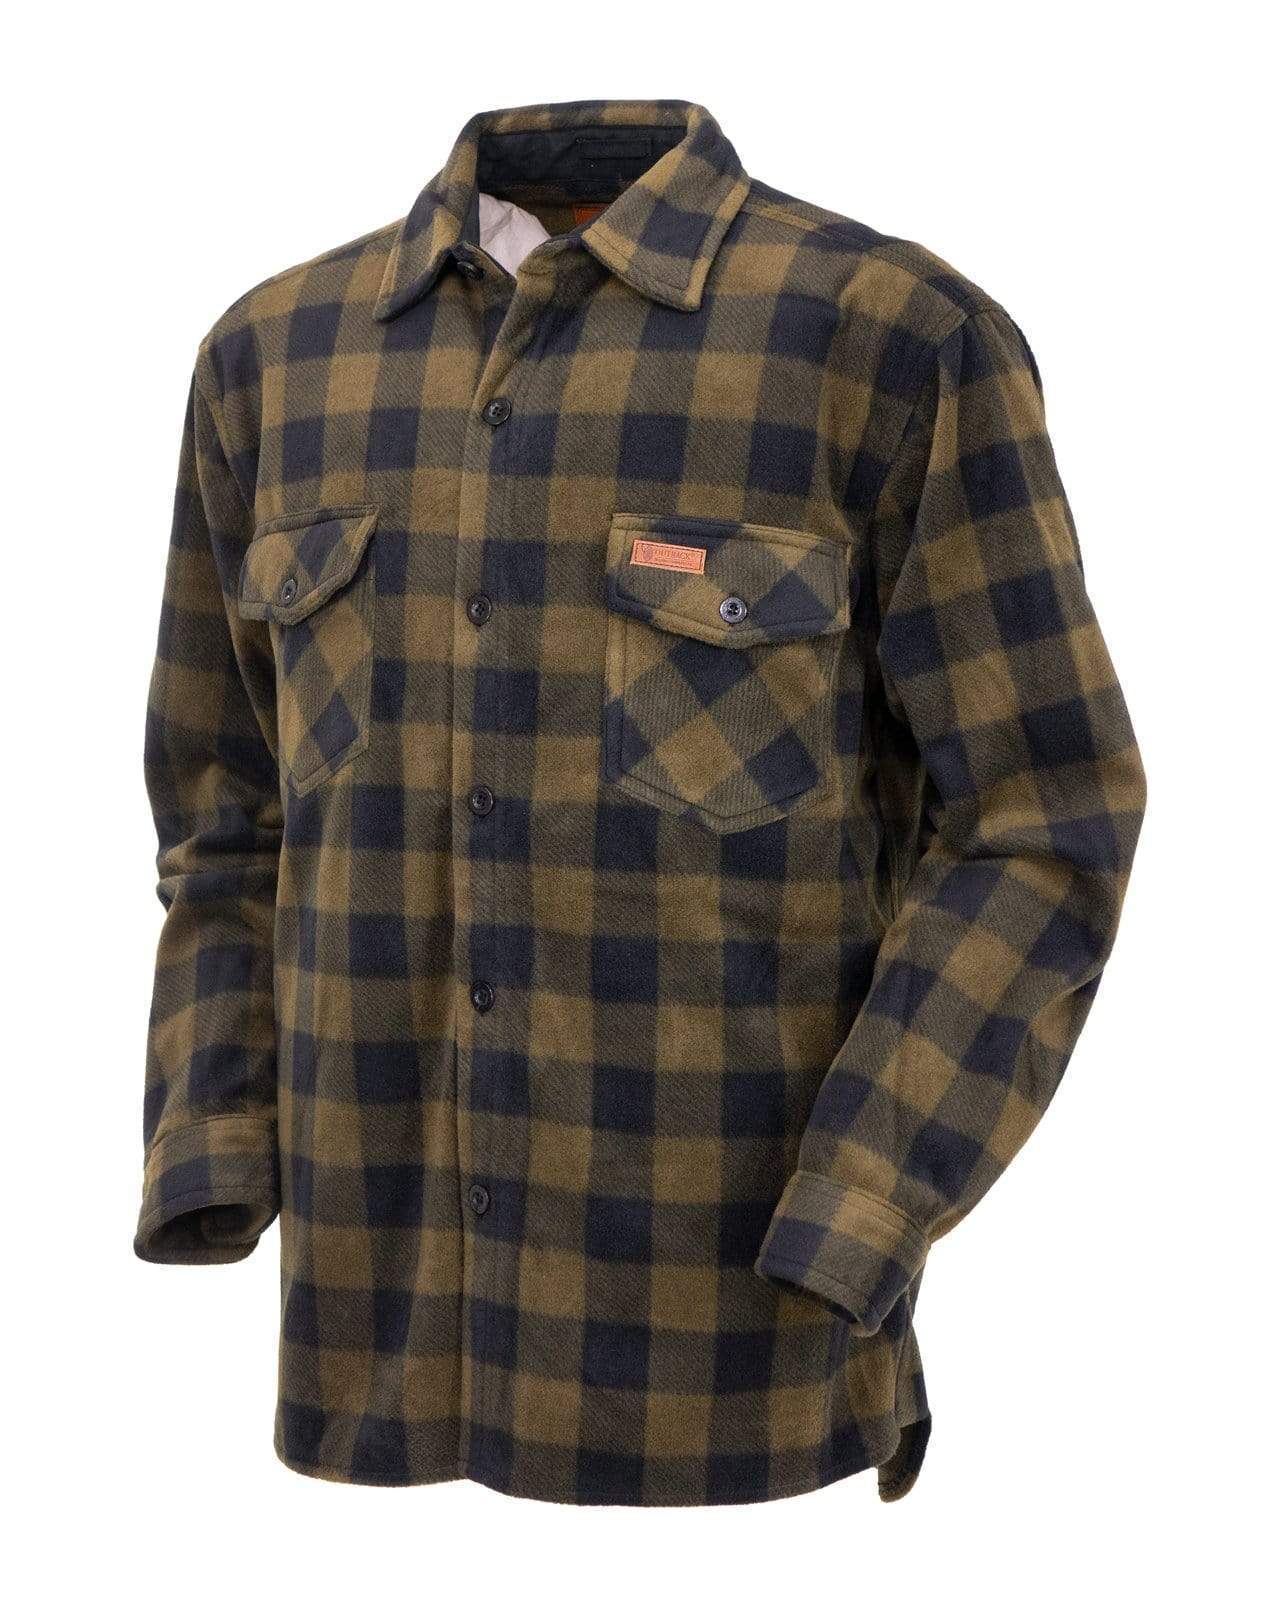 Outback Trading Company Men’s Fleece Big Shirt Shirts & Tops